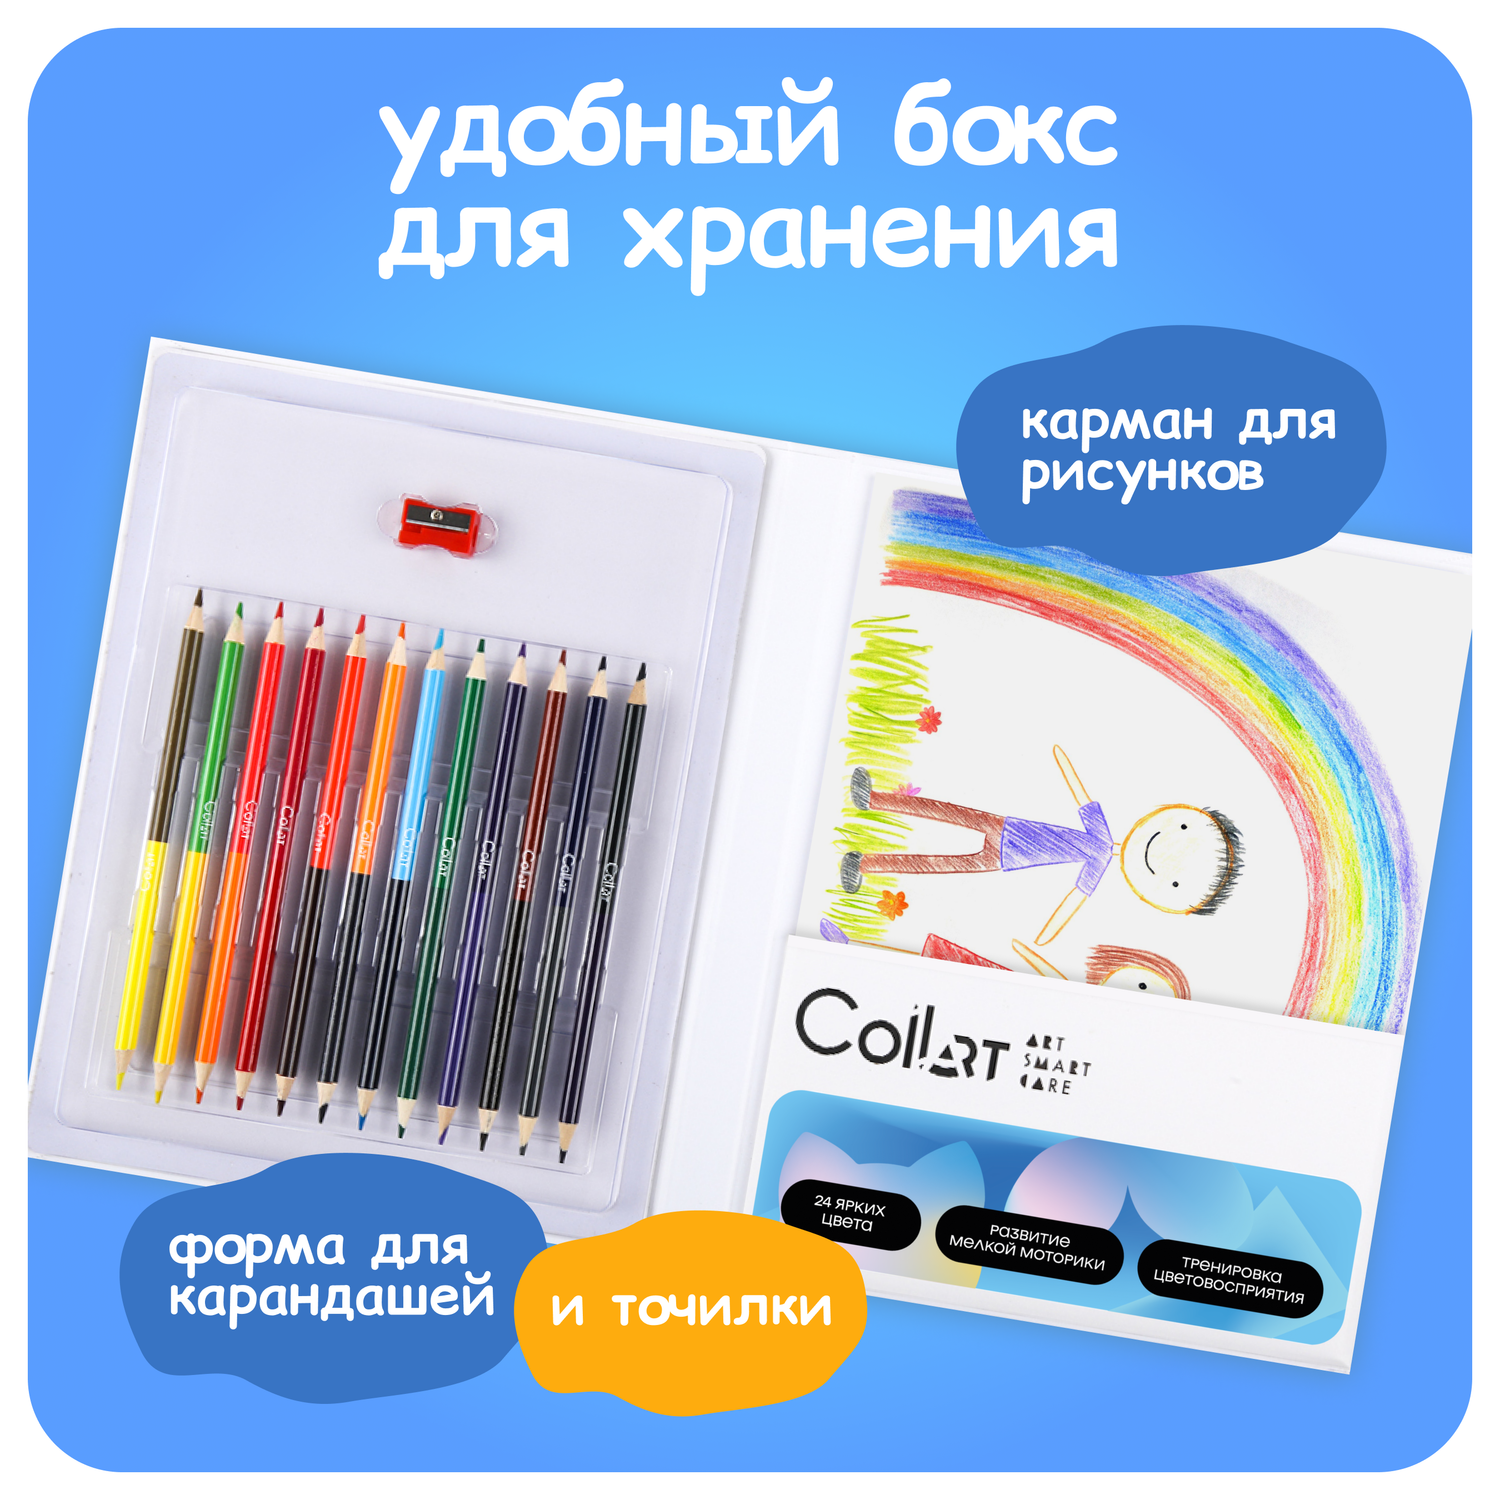 Цветные карандаши и раскраска Три кота набор для рисования и творчества детский 36 страниц 24 цвета - фото 2